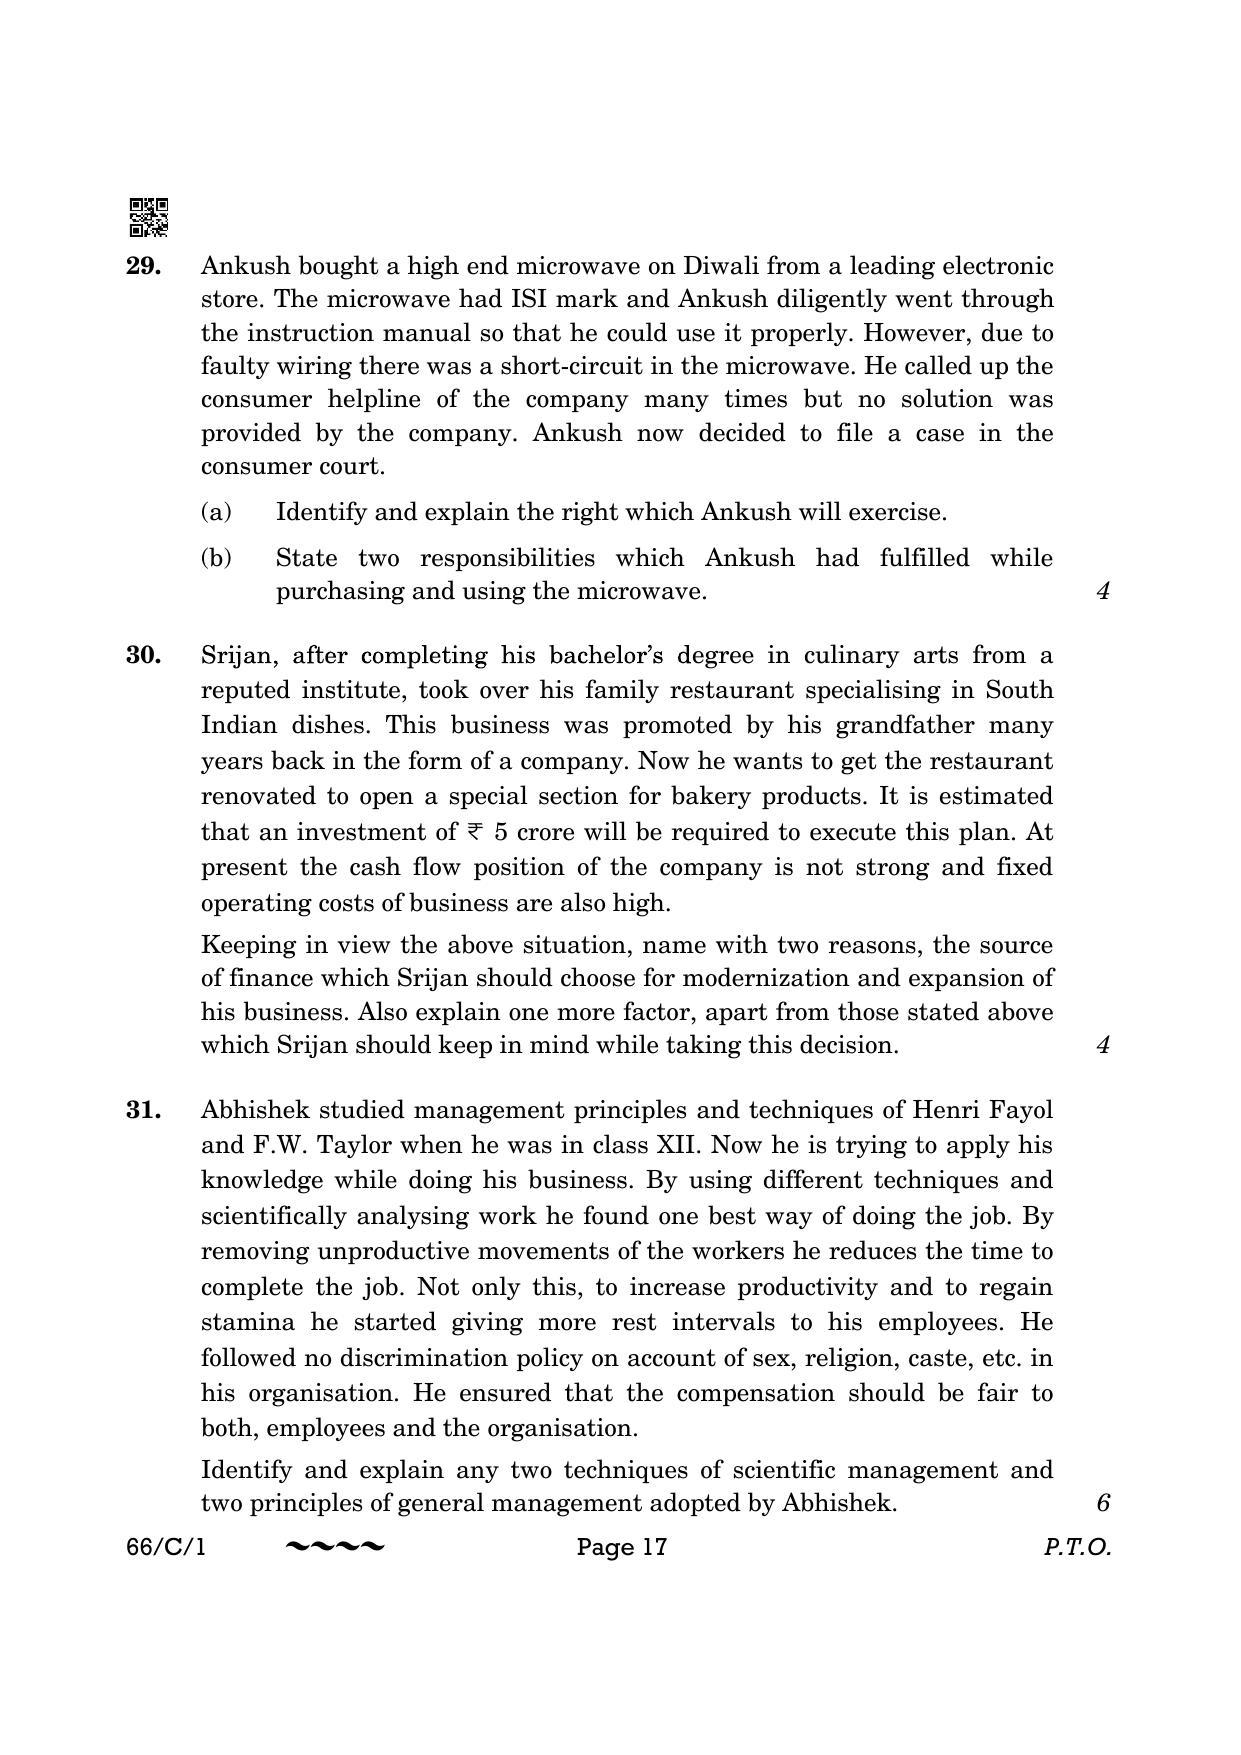 CBSE Class 12 66-1-1 Business Studies 2023 (Compartment) Question Paper - Page 17